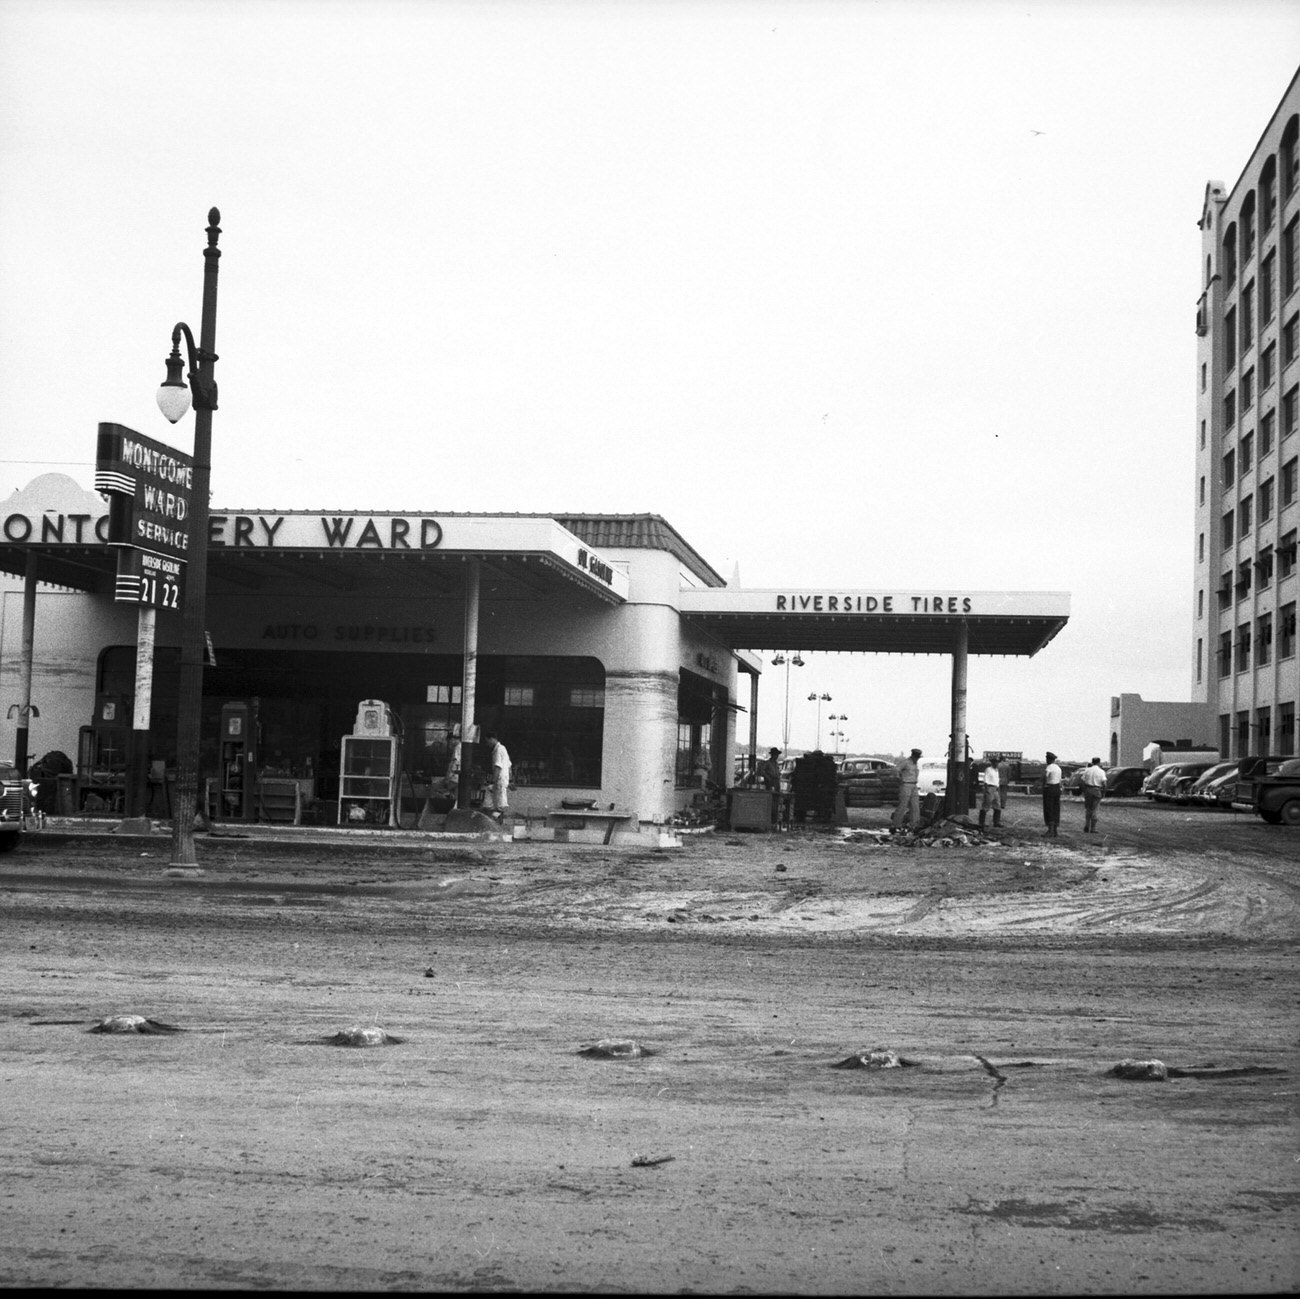 Montgomery Ward car service station, 1949